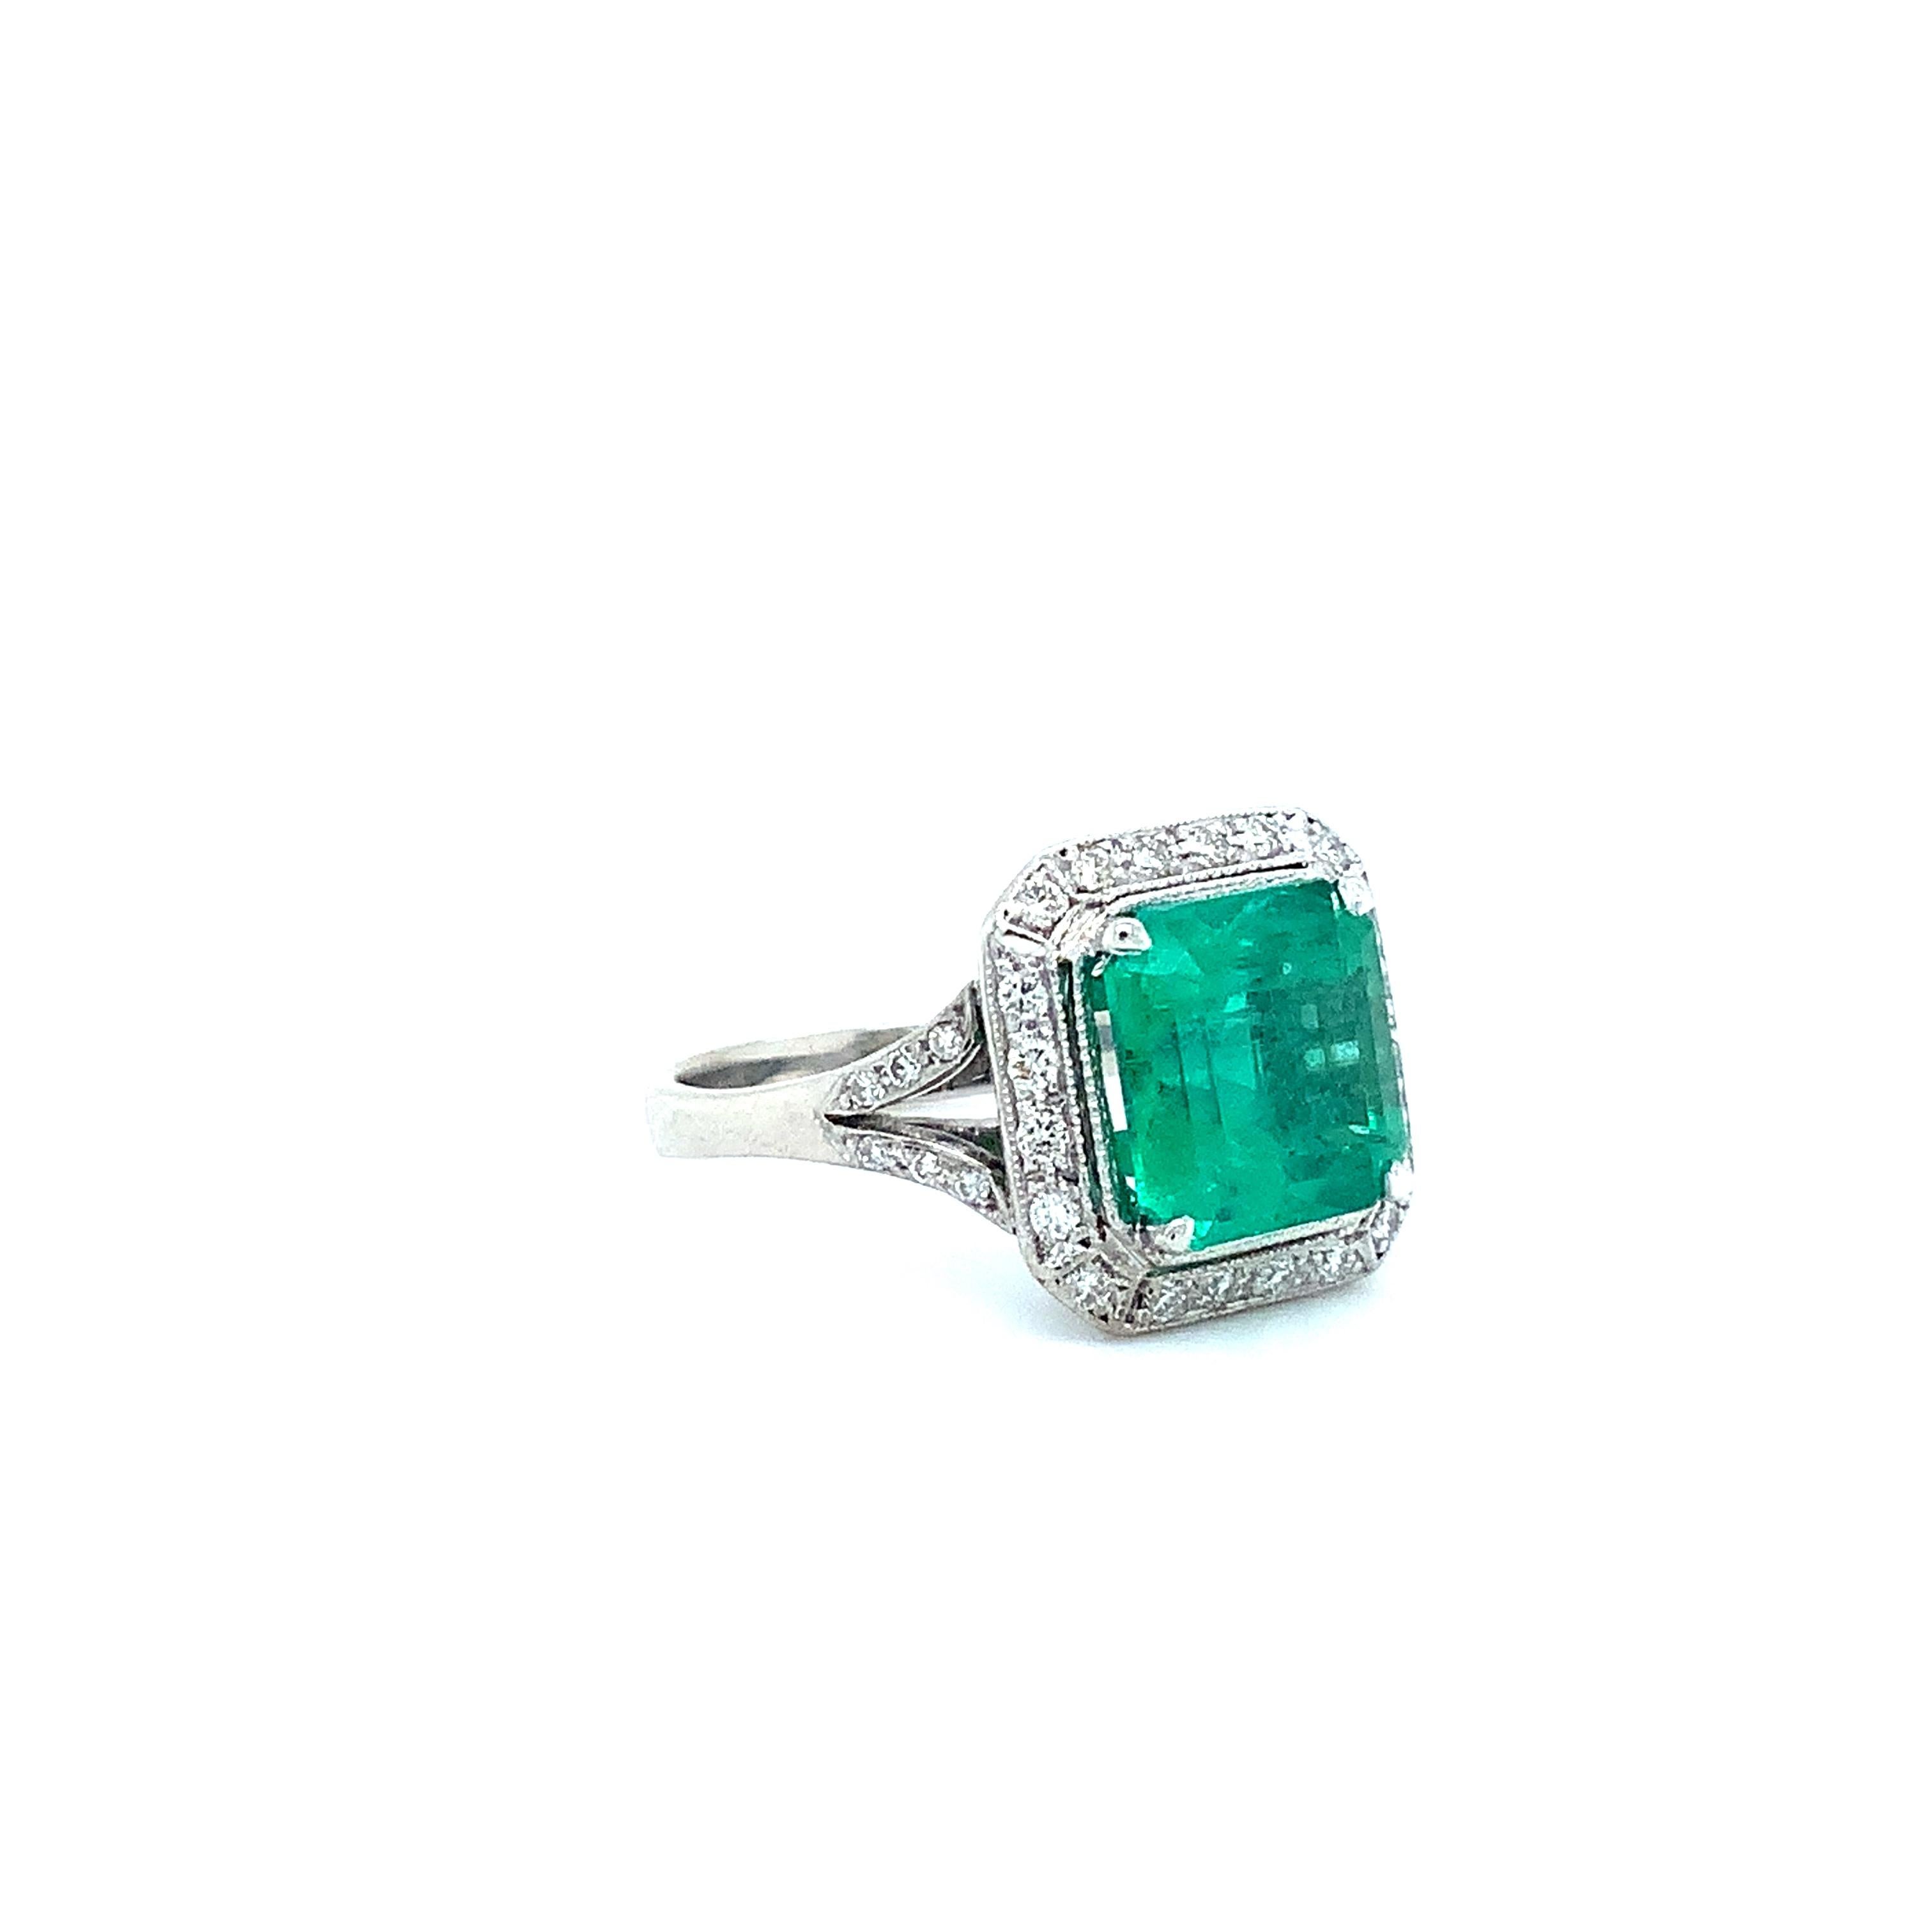 3.19 Carat Vintage Emerald and Diamond Ring Set in 18 Karat White Gold For Sale 4